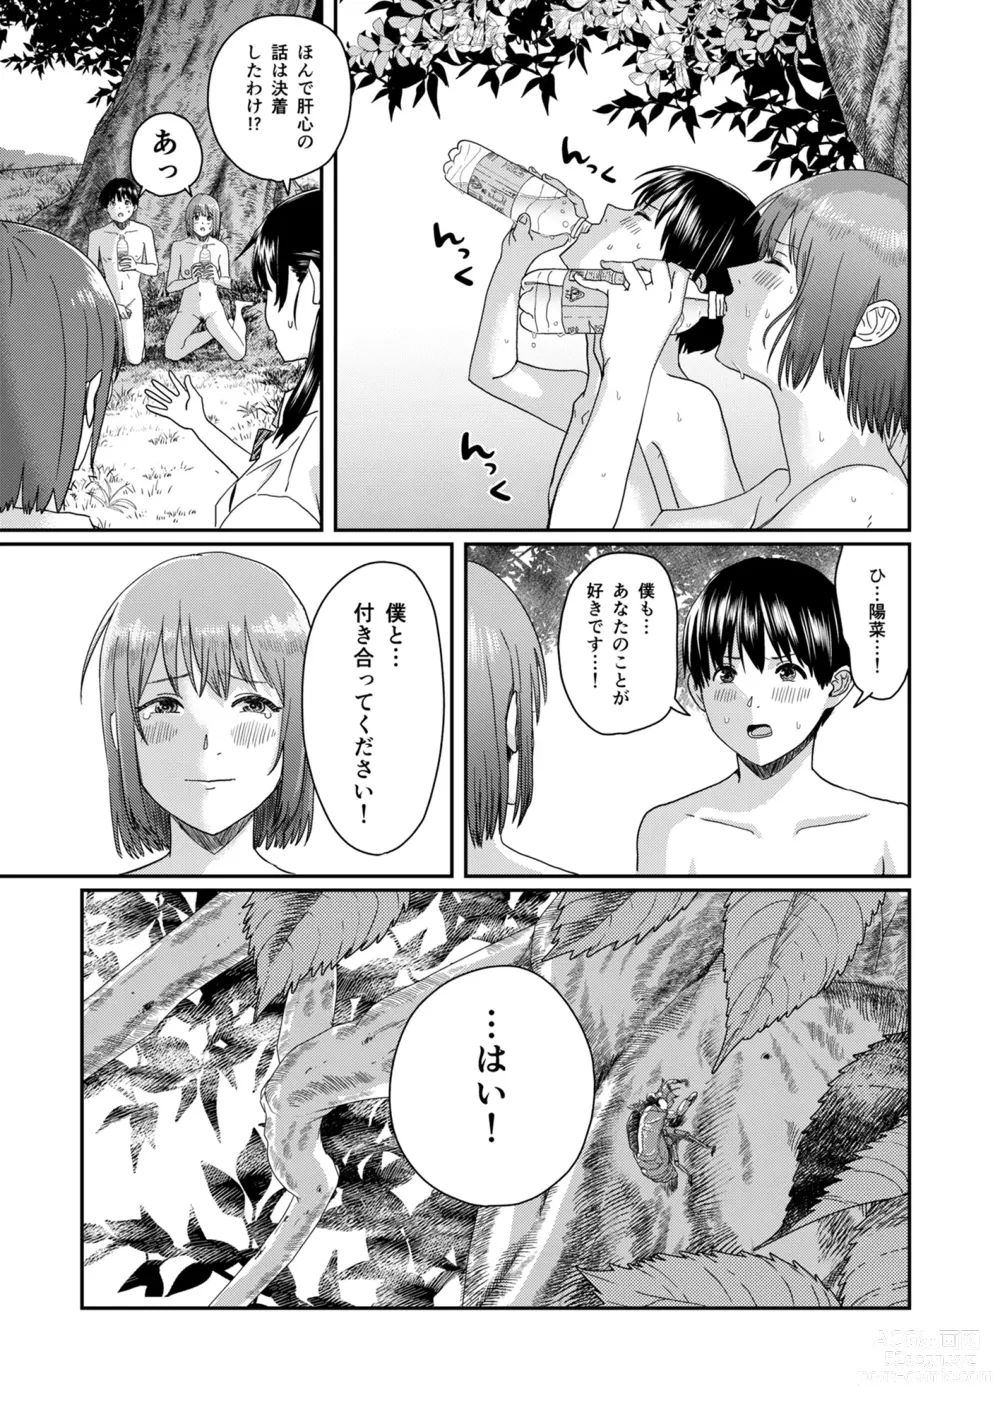 Page 62 of doujinshi Zenra Kokuhaku.